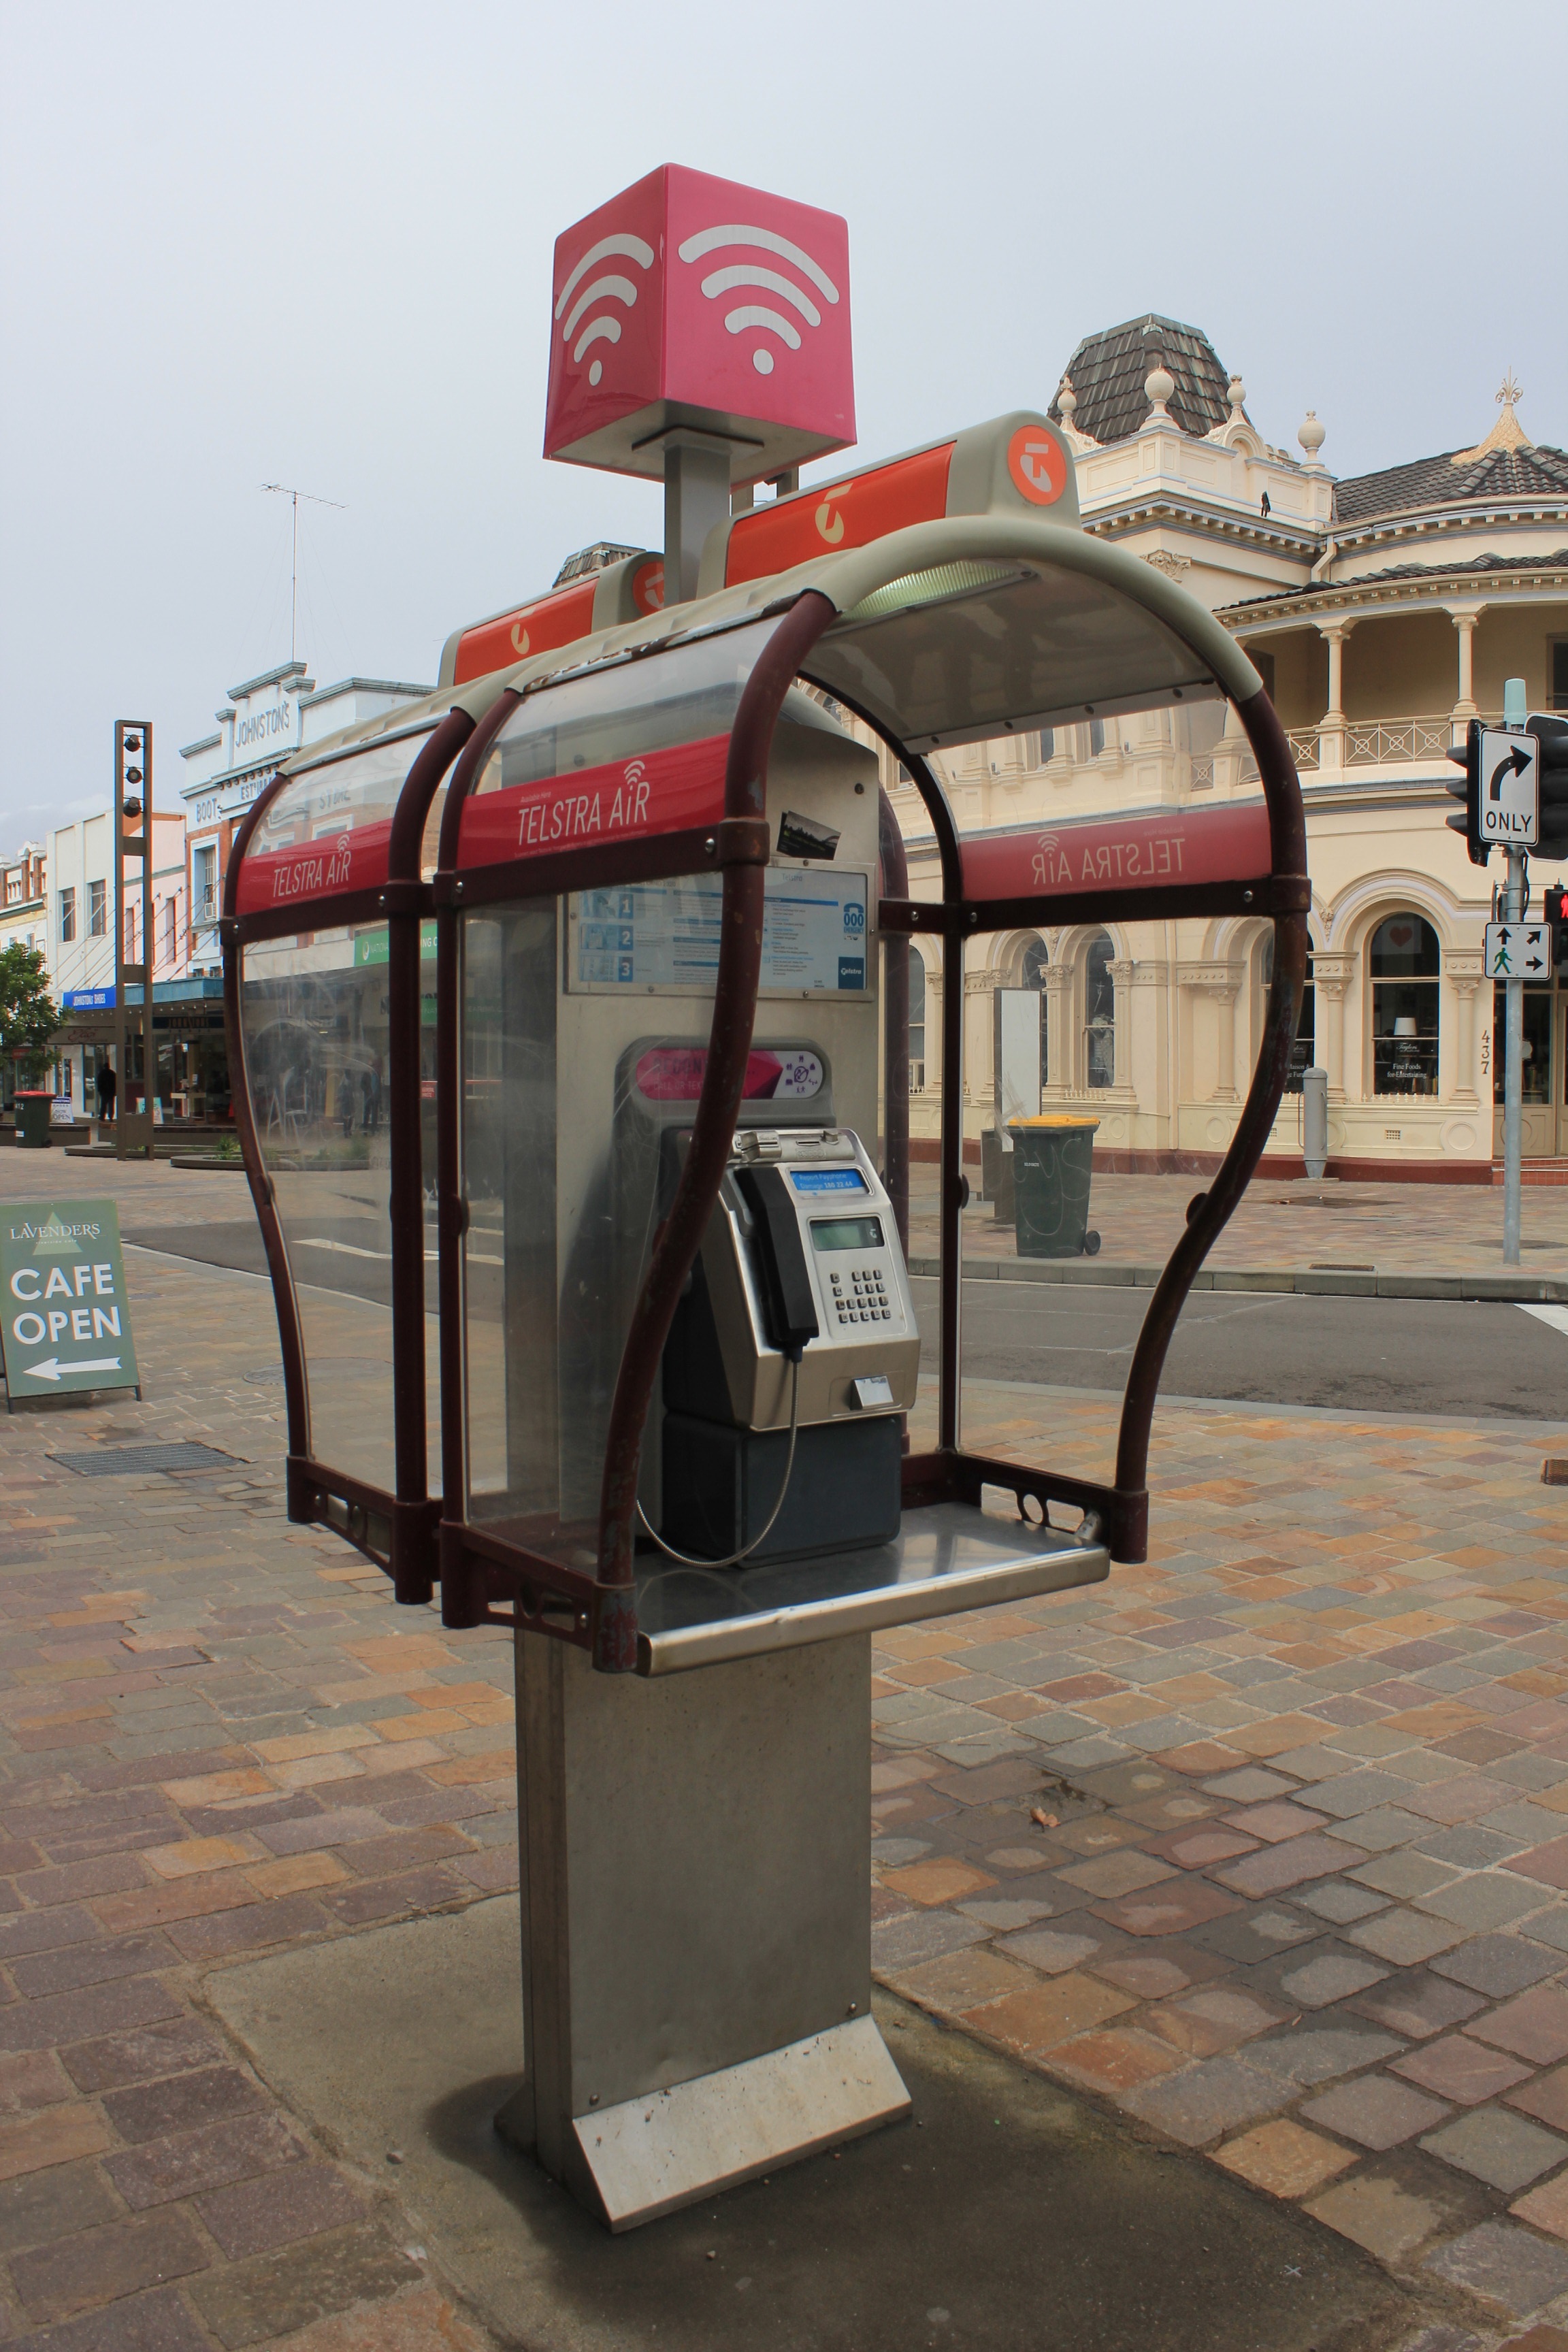 Telephone booth - Wikipedia